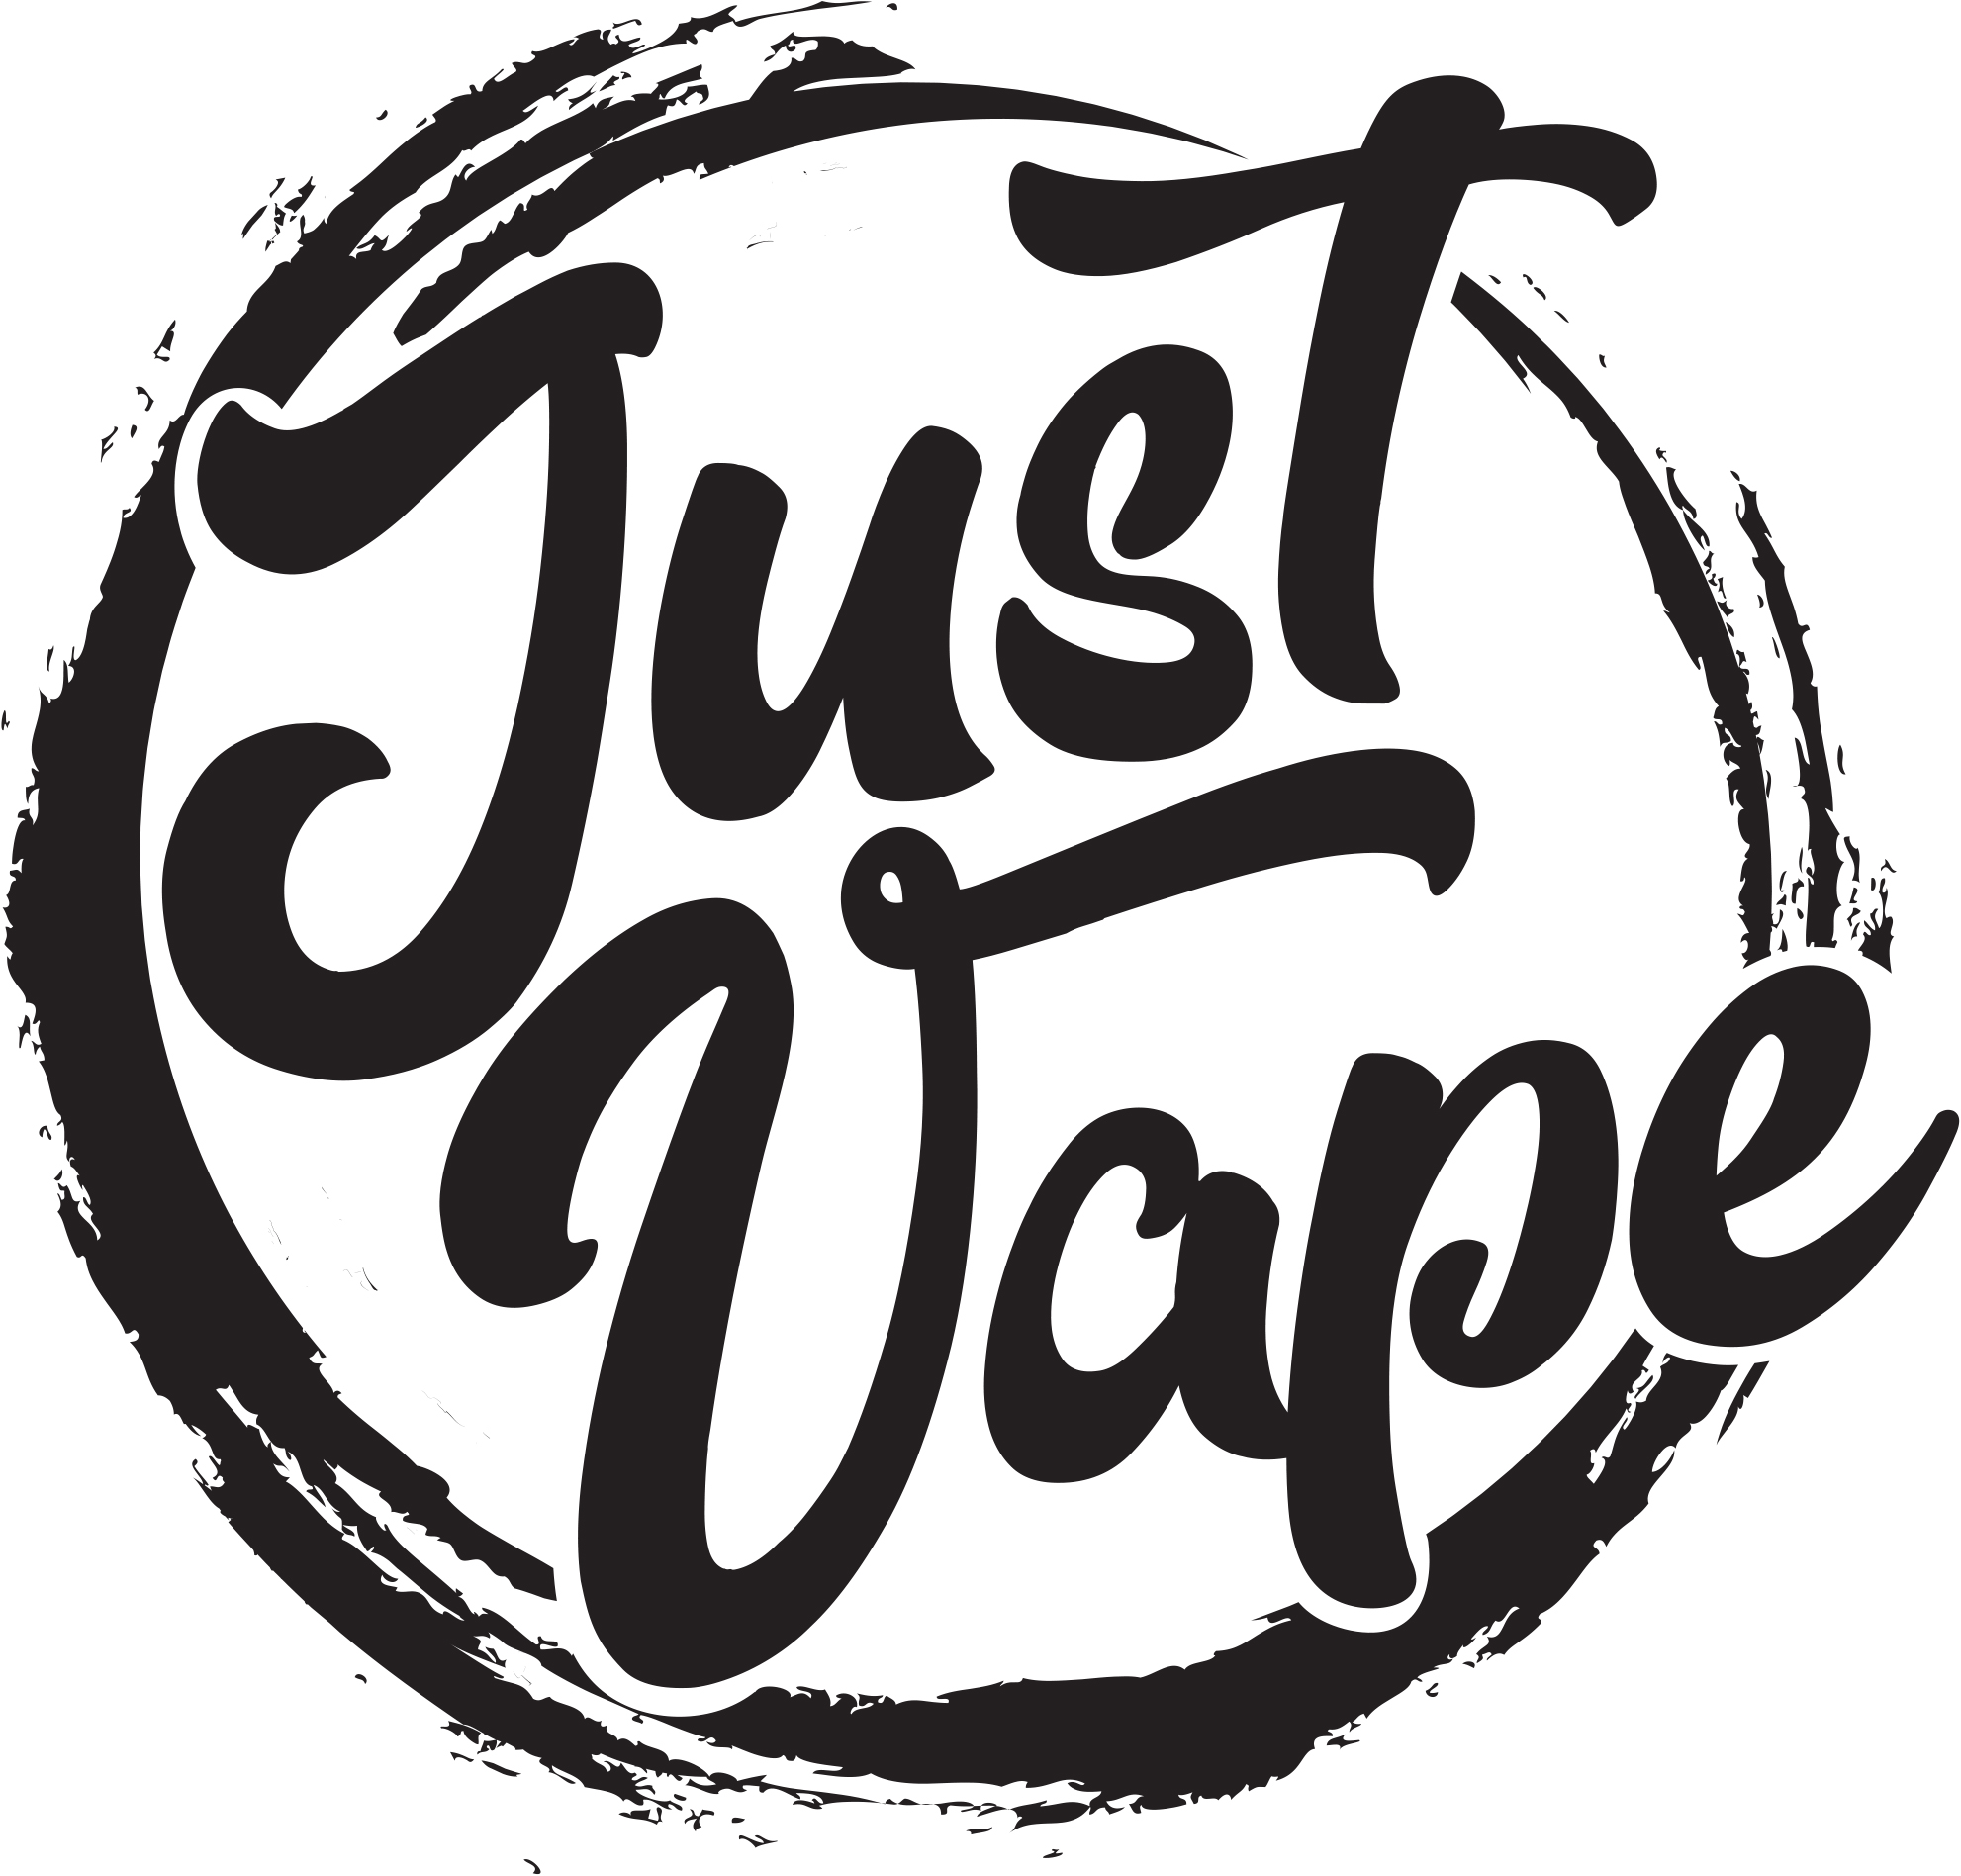 justvape_logo